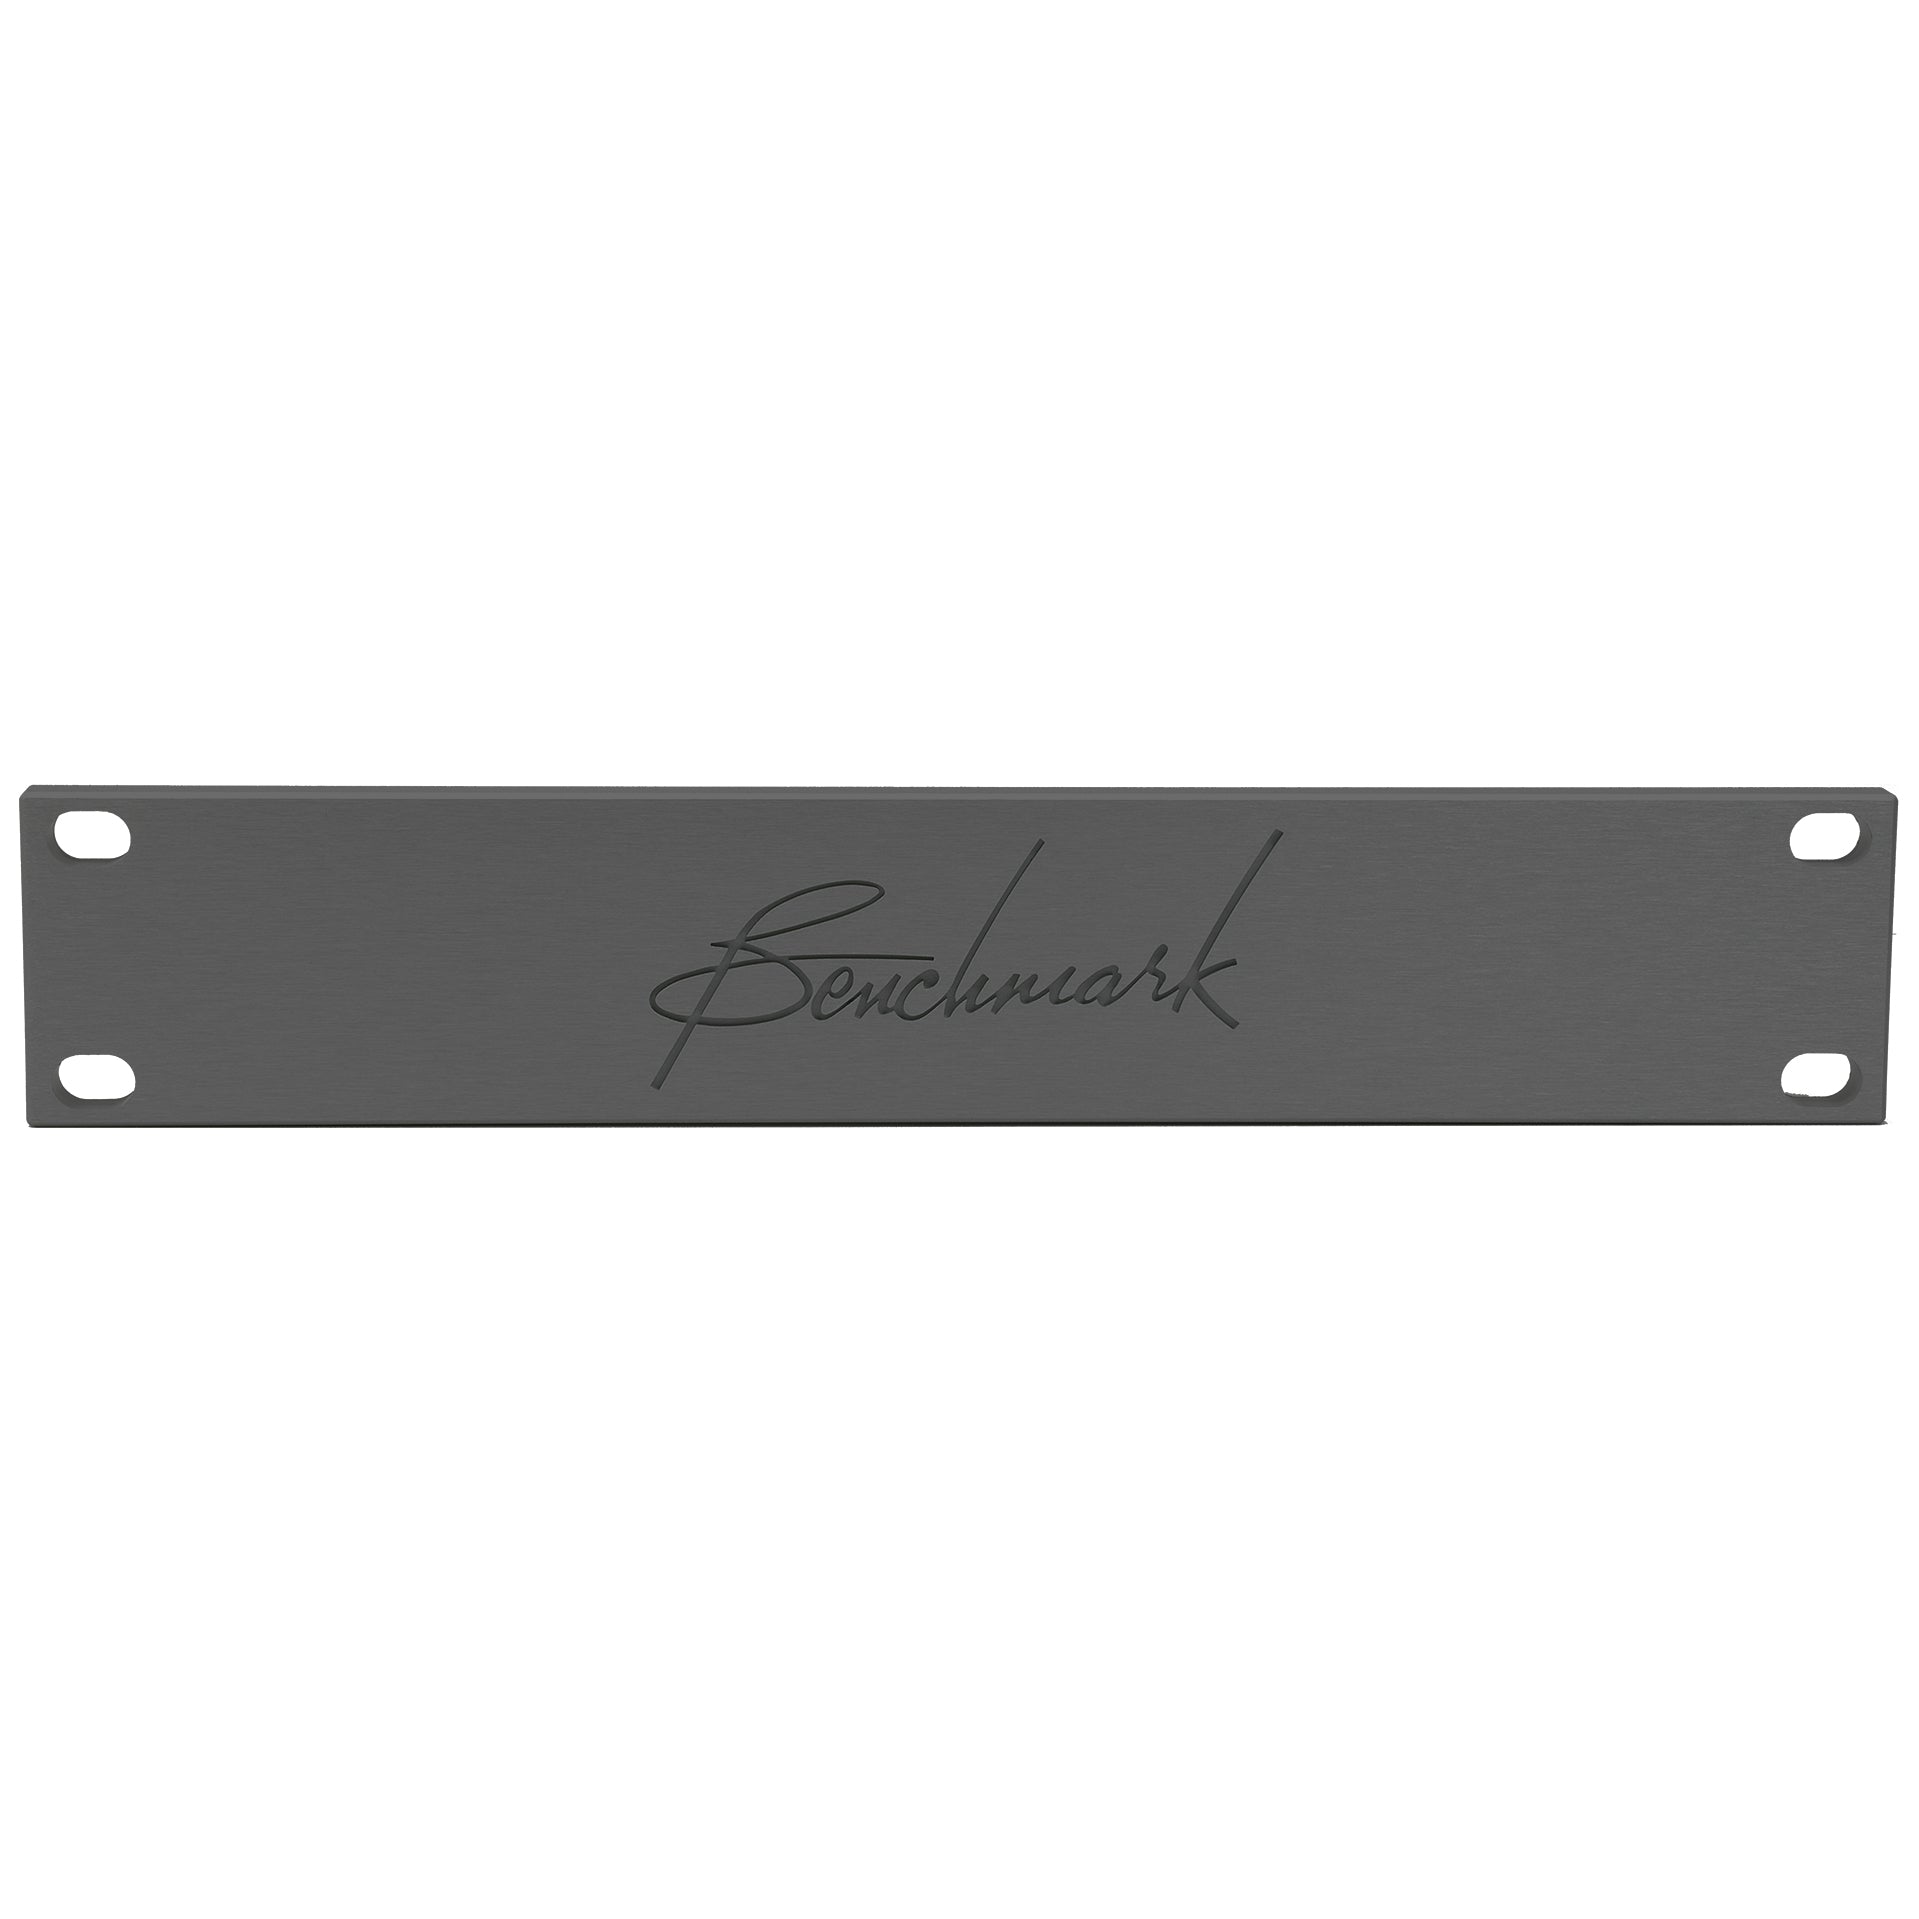 Premium Black Blank Plate - Includes Engraved Benchmark Logo